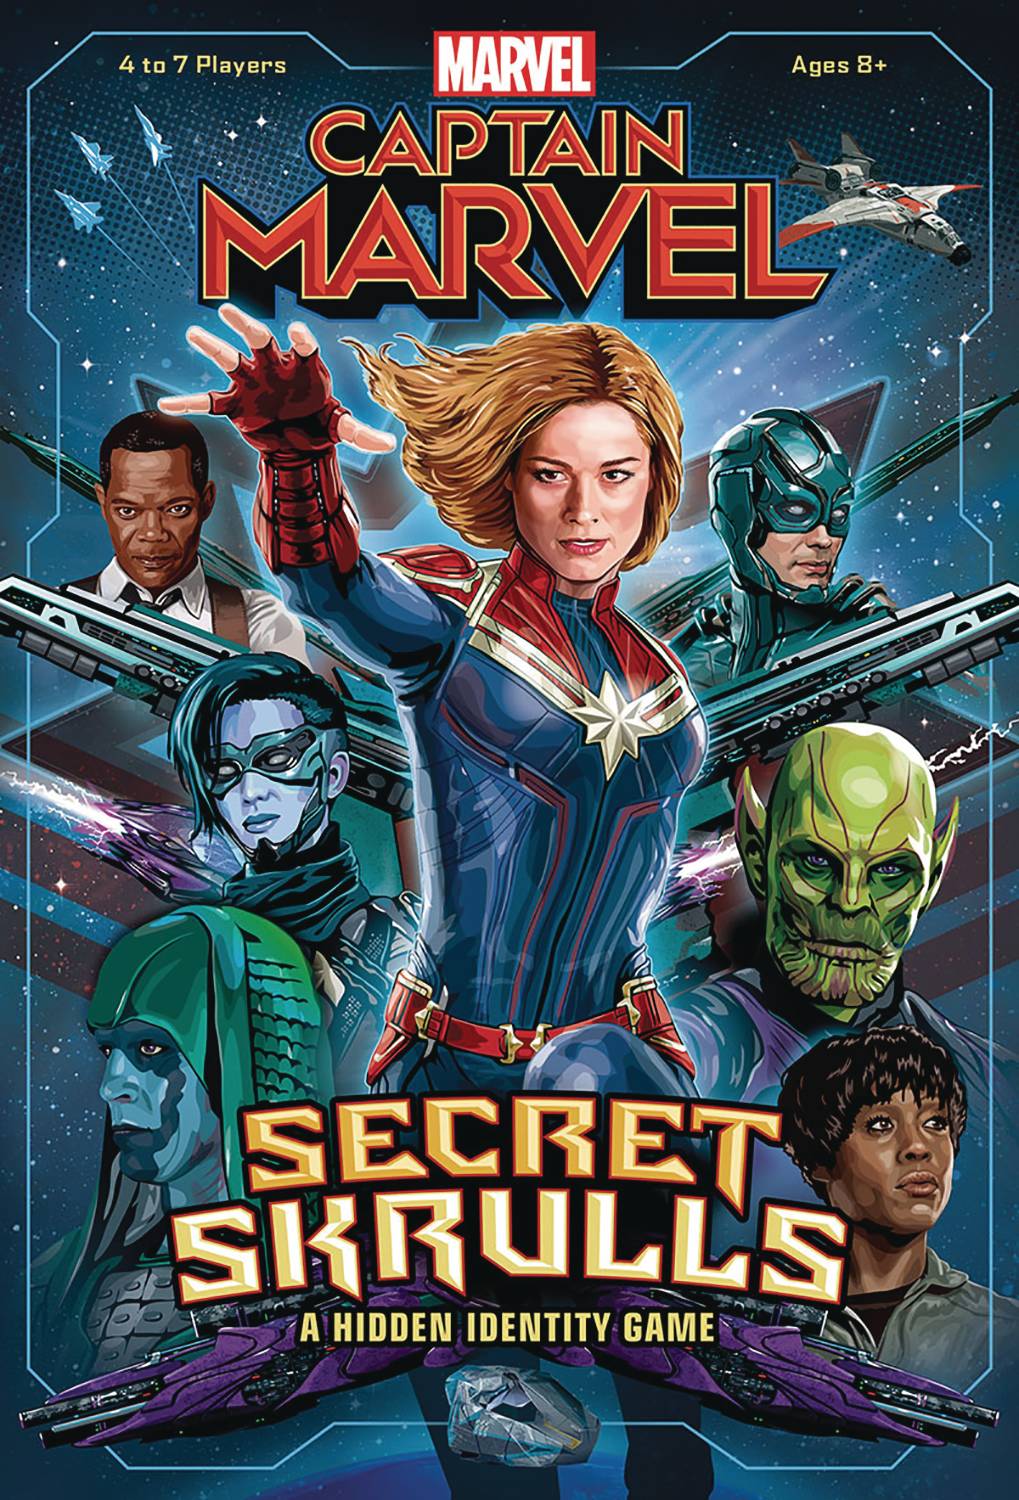 Captain Marvel Secret Skrulls Card Game